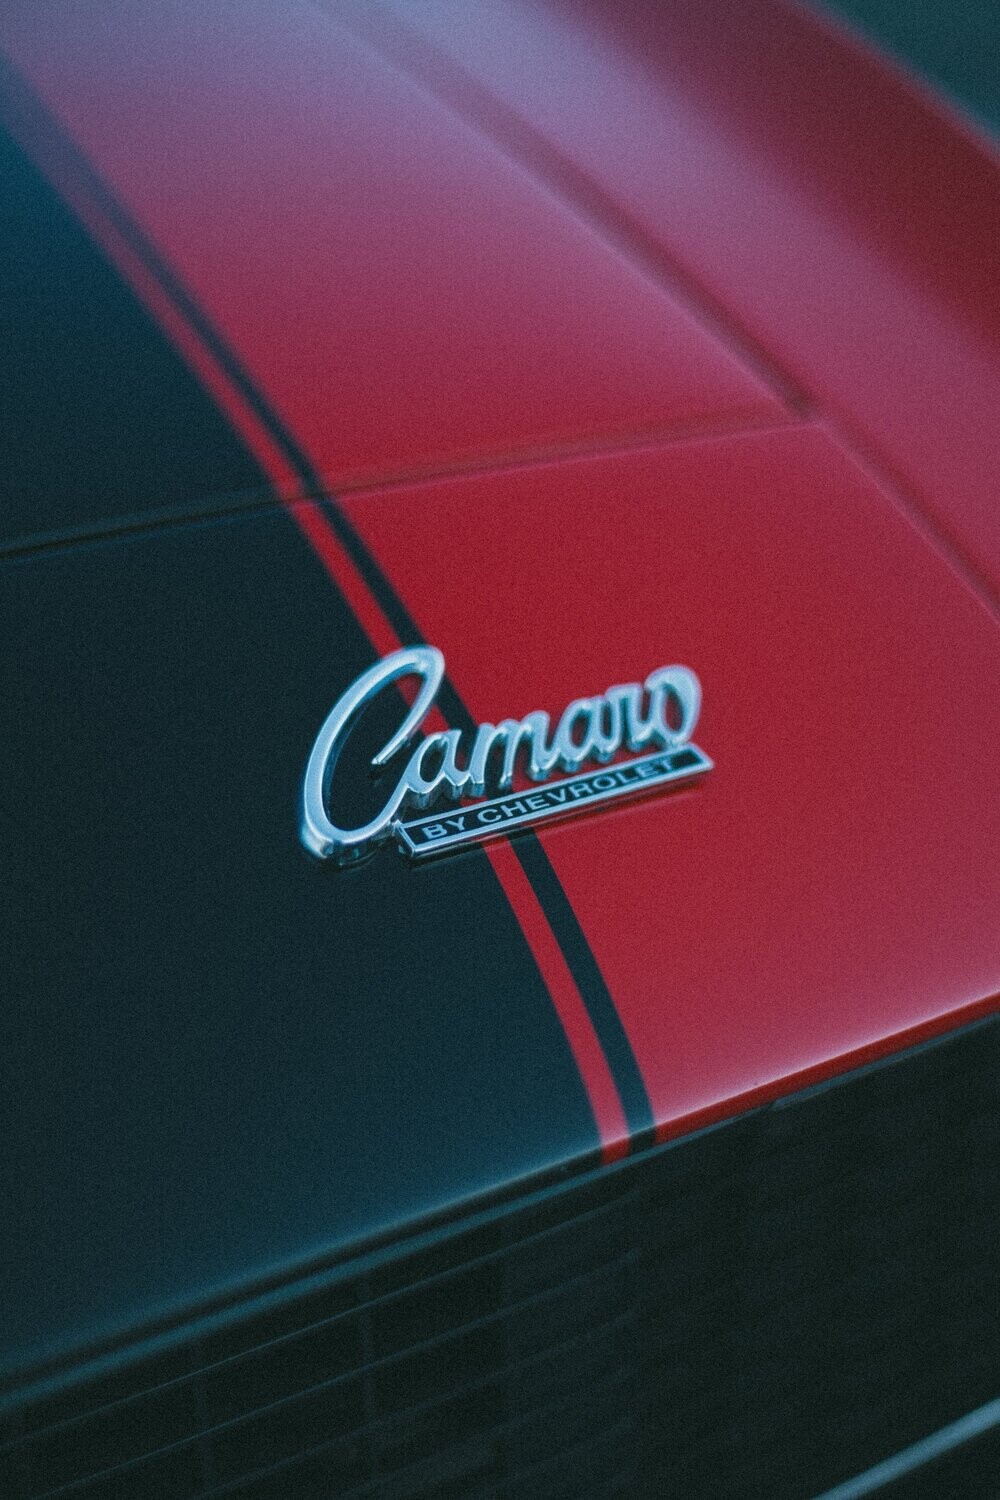 "Camaro" Emblem